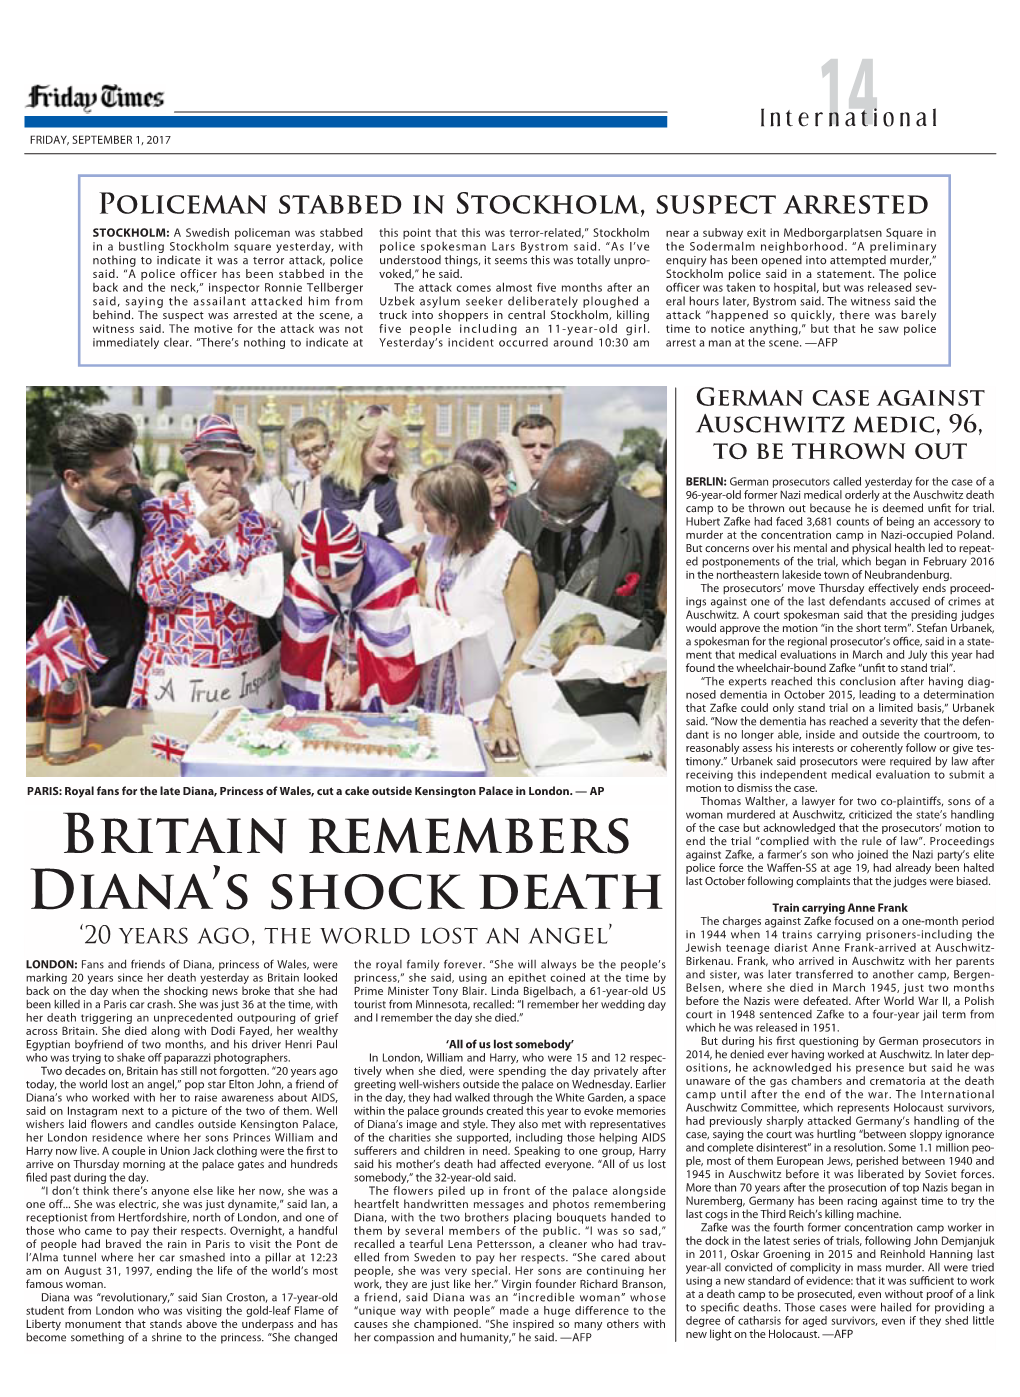 Britain Remembers Diana's Shock Death